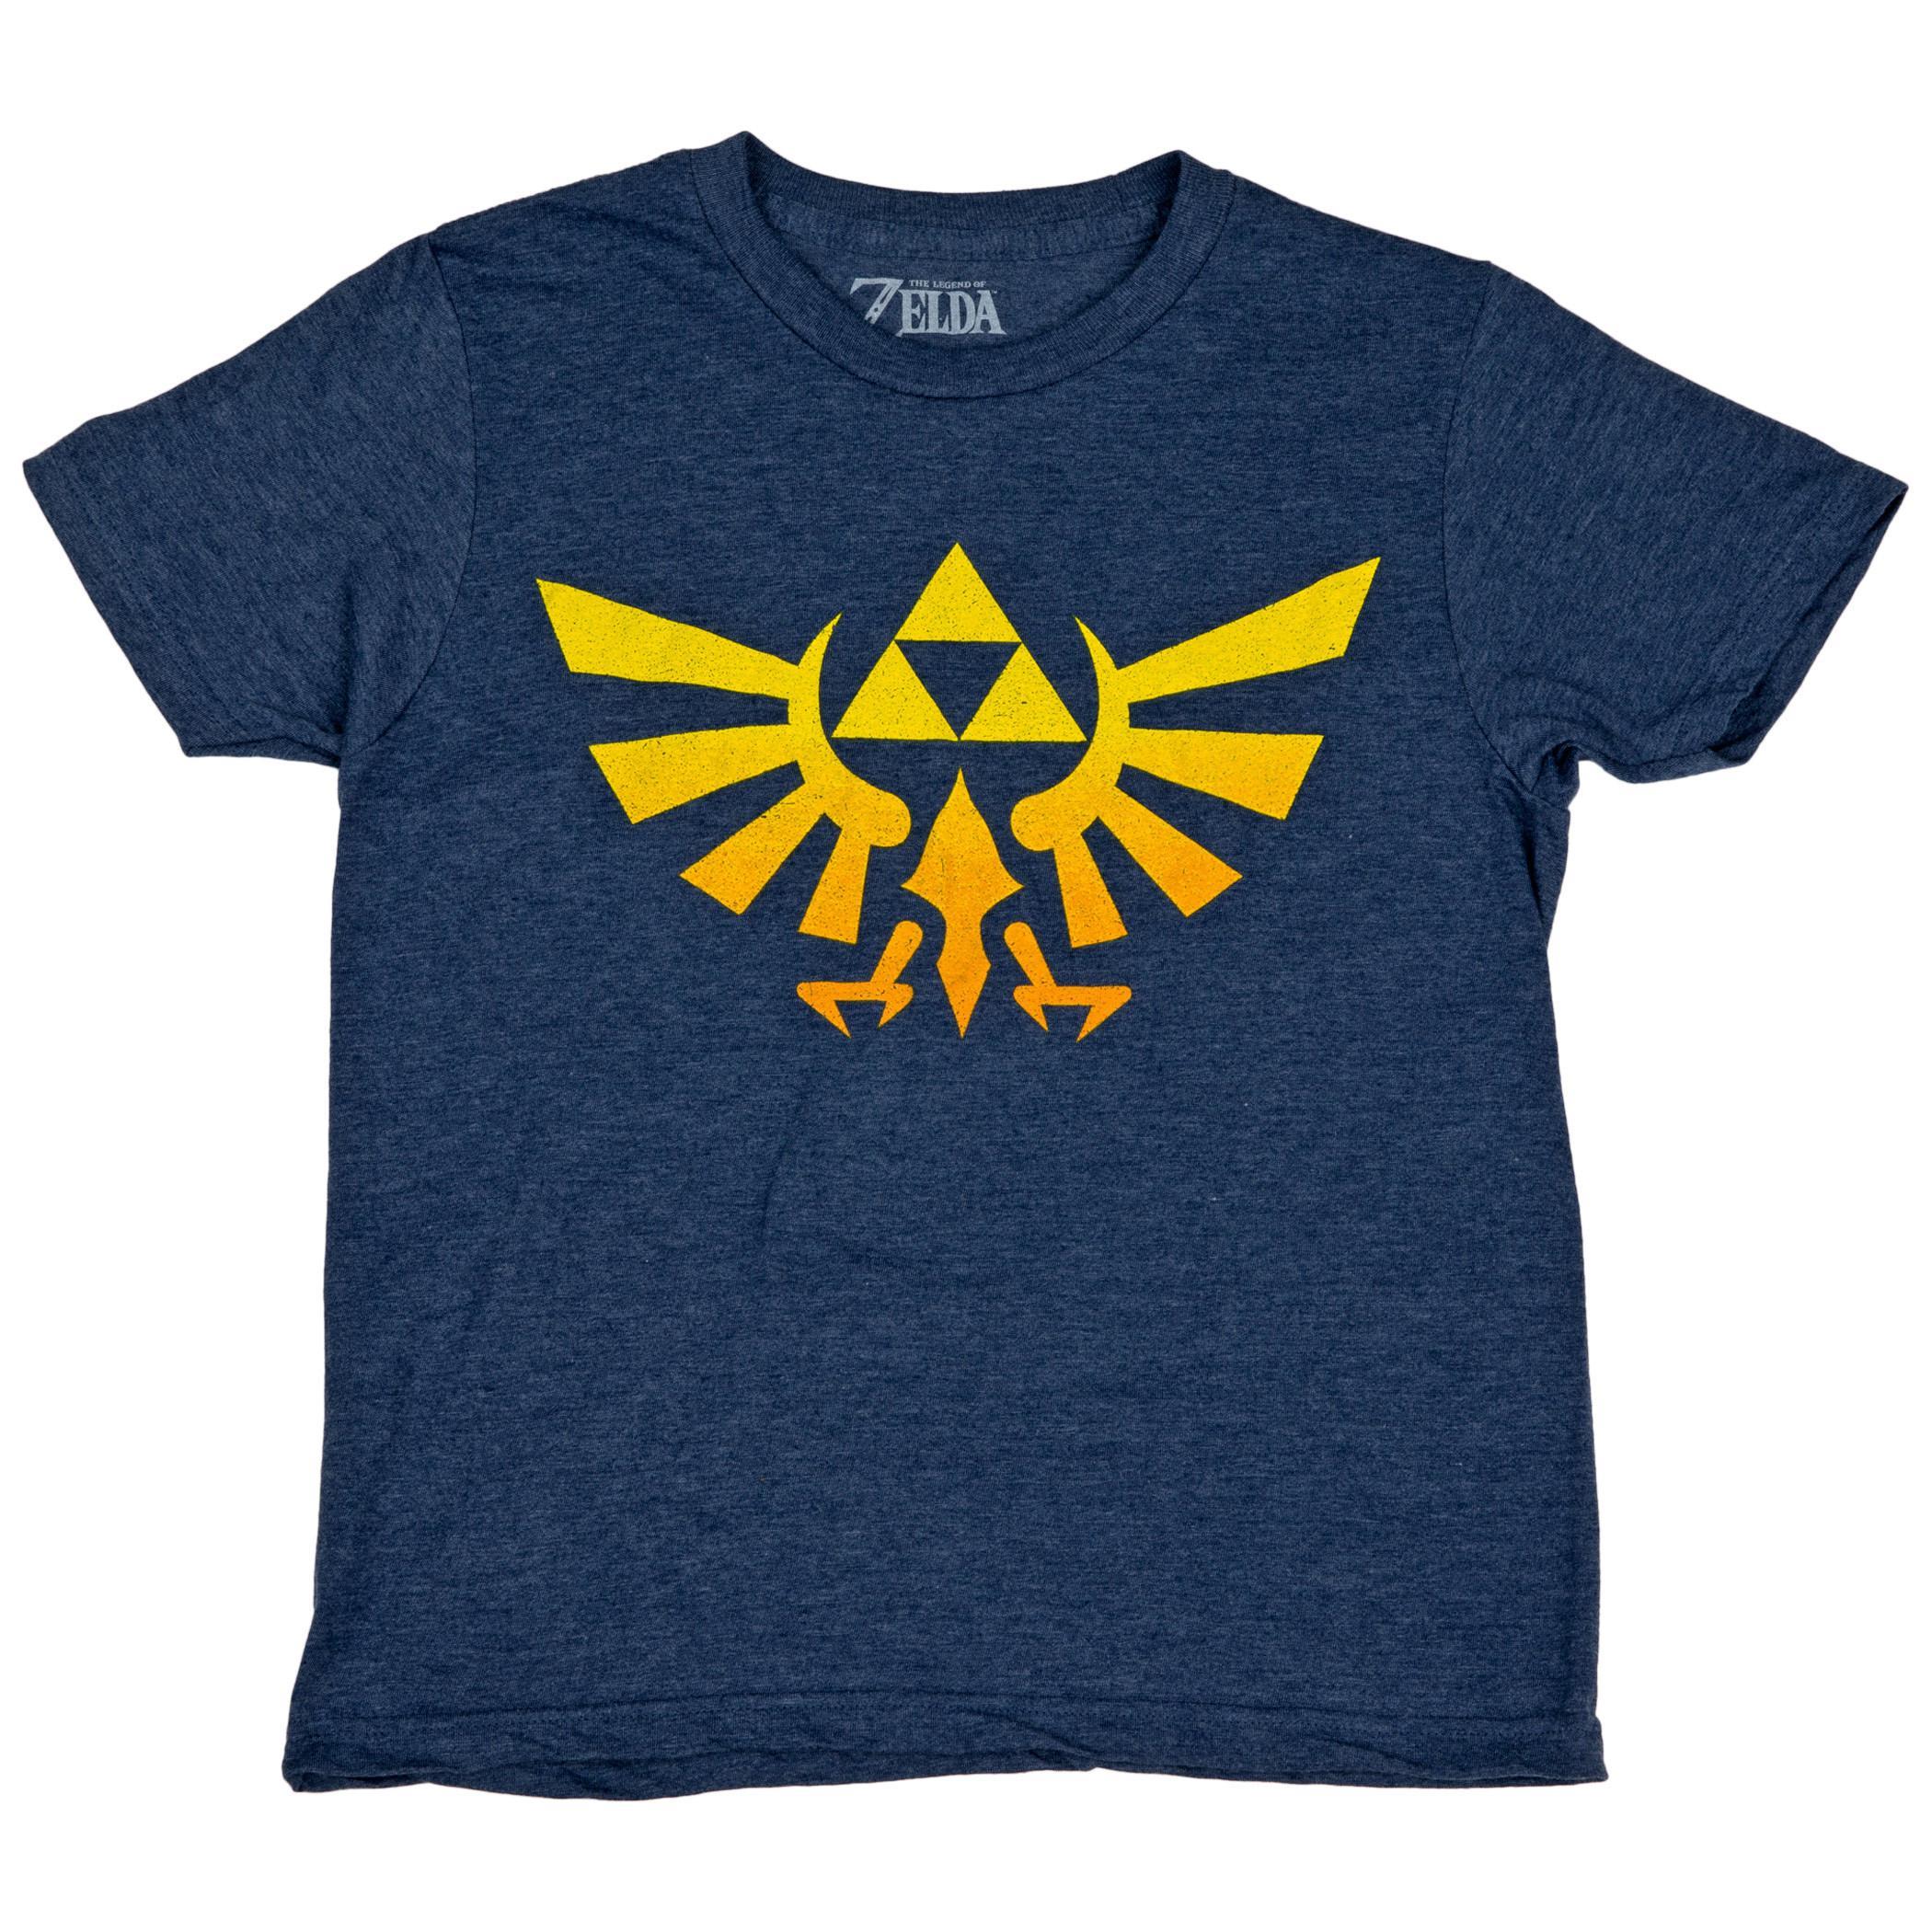 Nintendo The Legend of Zelda Royal Crest Youth T-Shirt XLarge